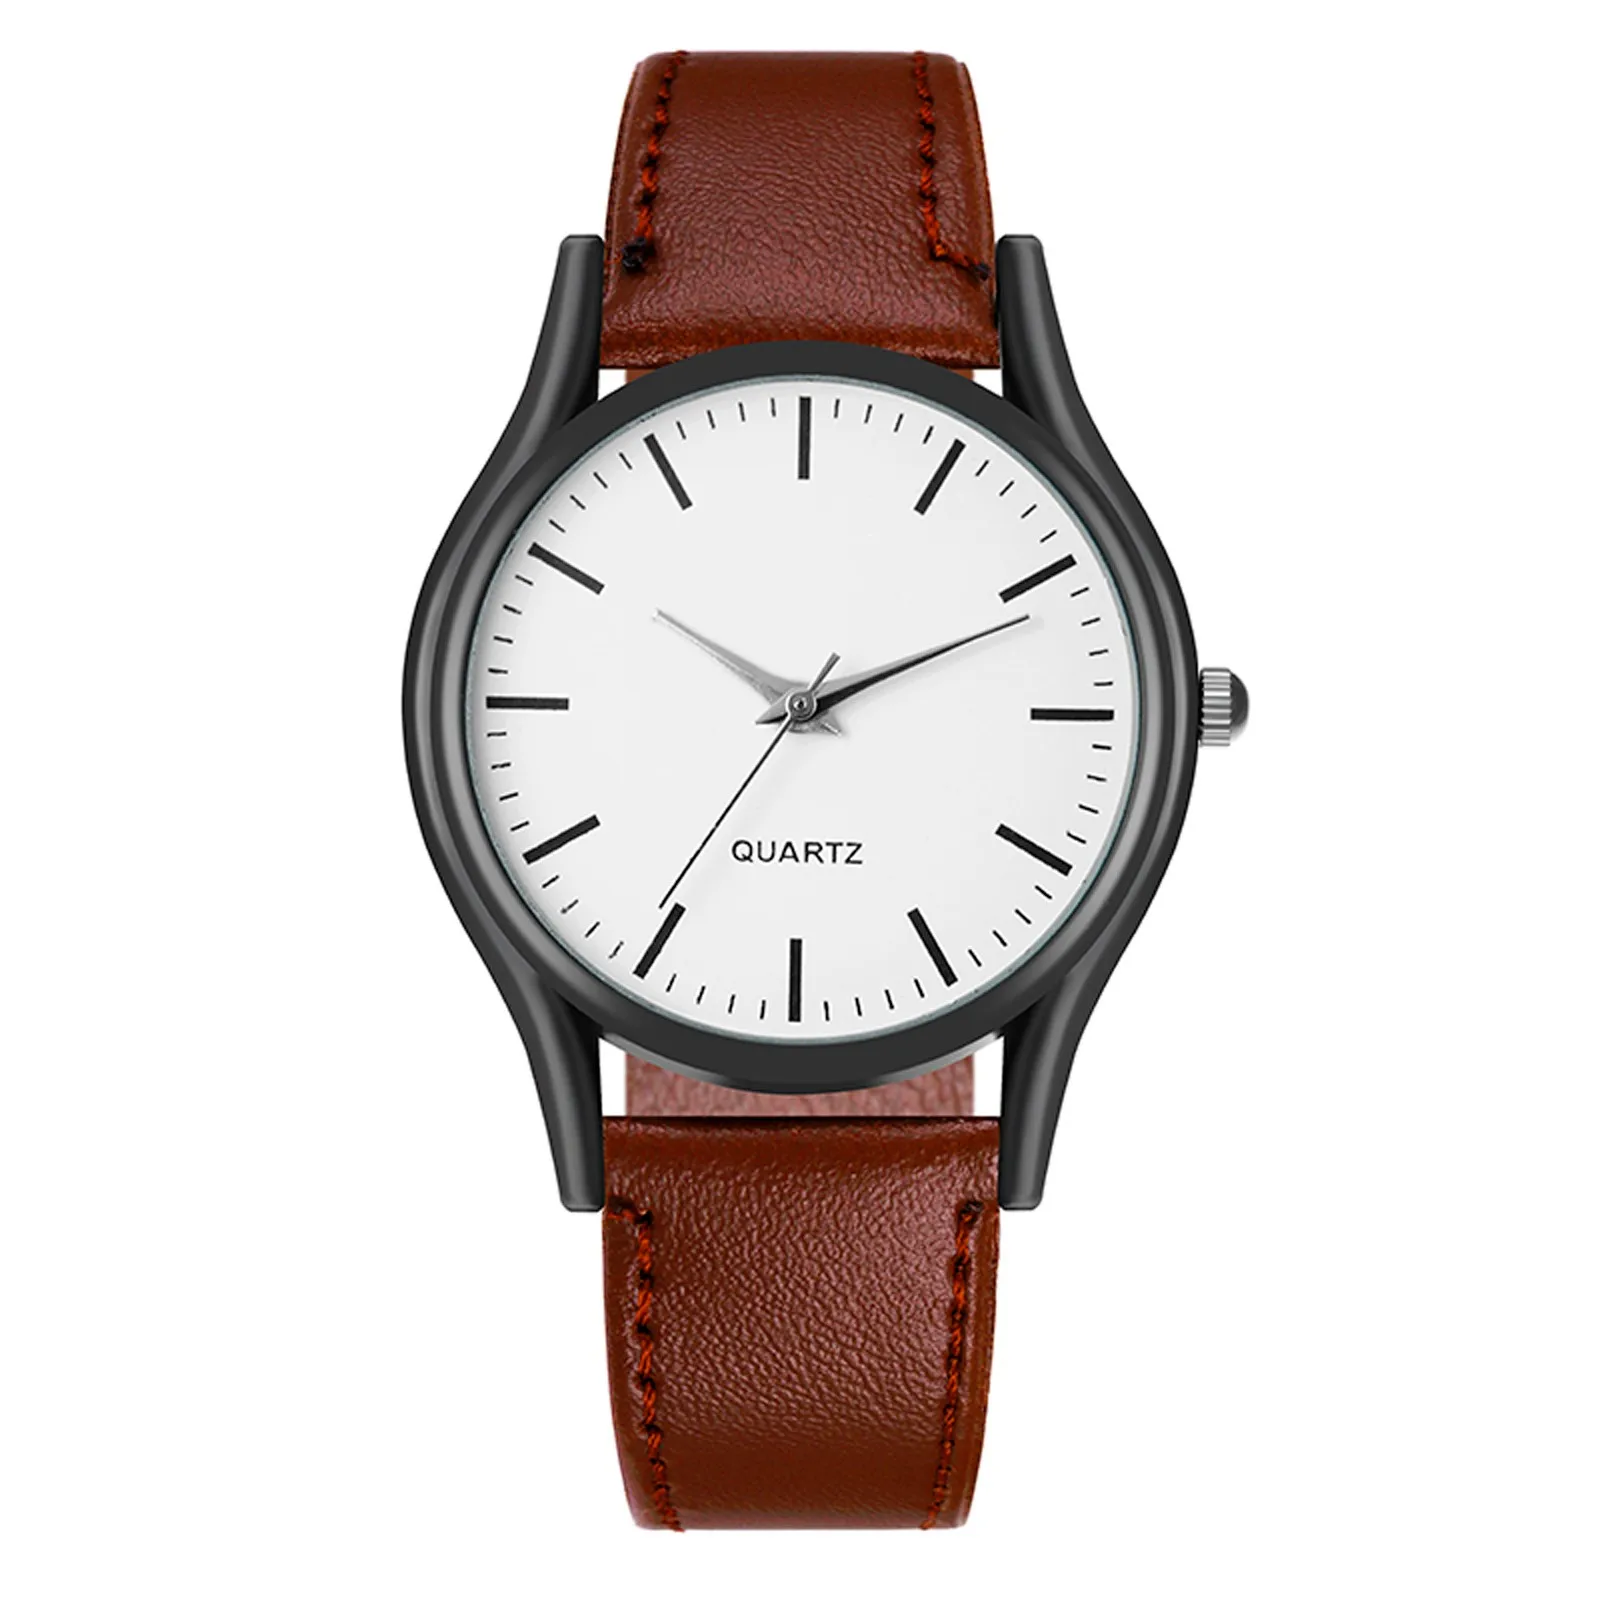 Watch for men fashion business design hand watch leather watch erkek kol saati thumb155 crop